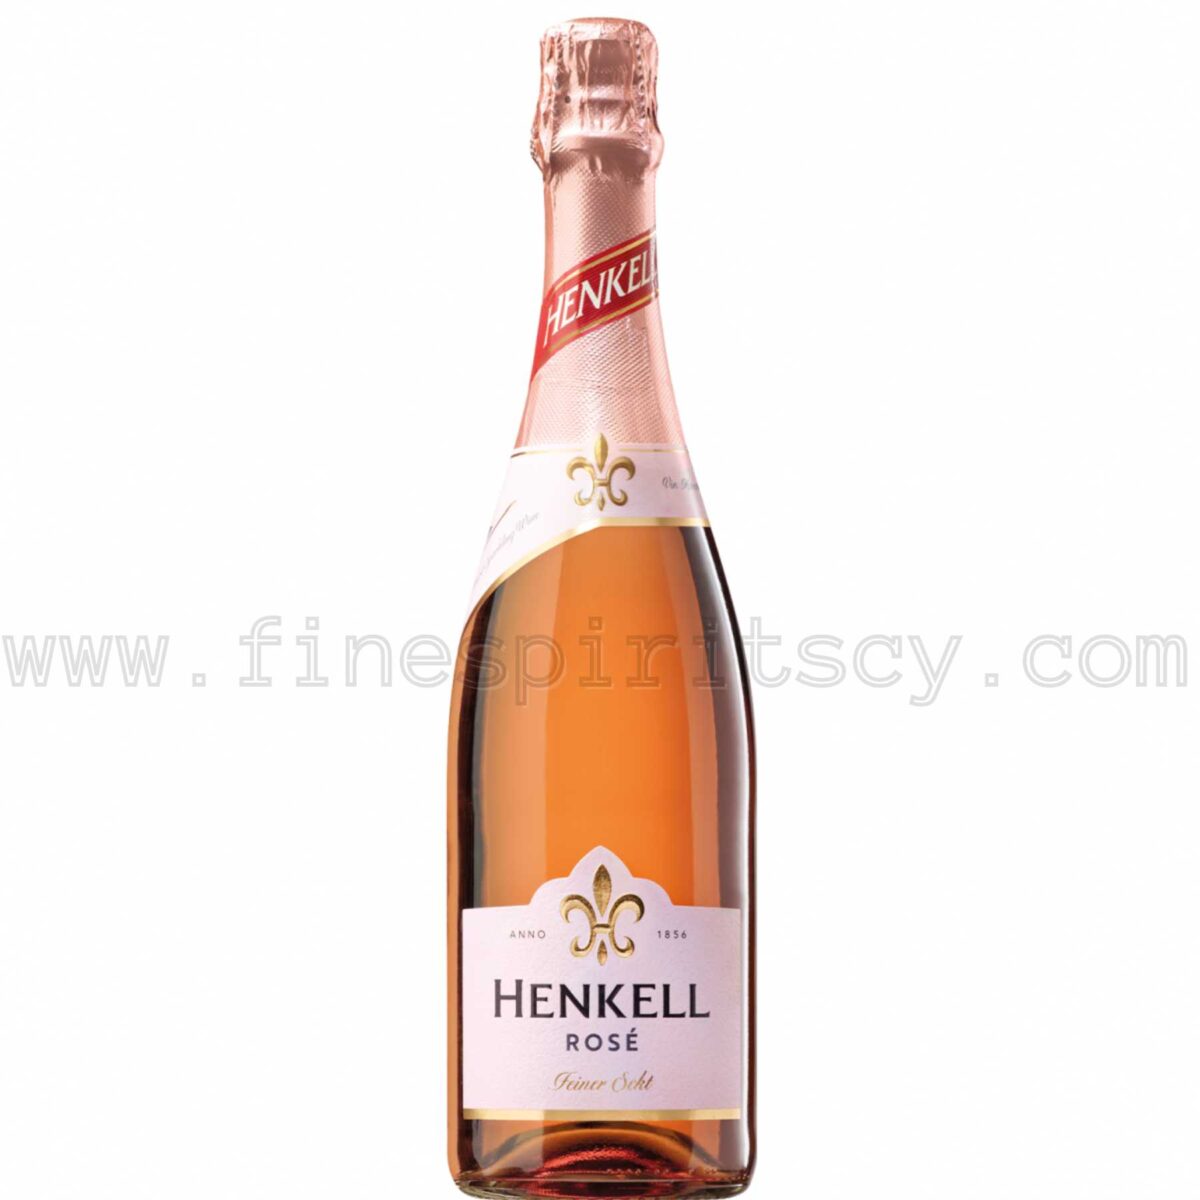 Henkell Rose Wine Cyprus Fine Spirits CY Online